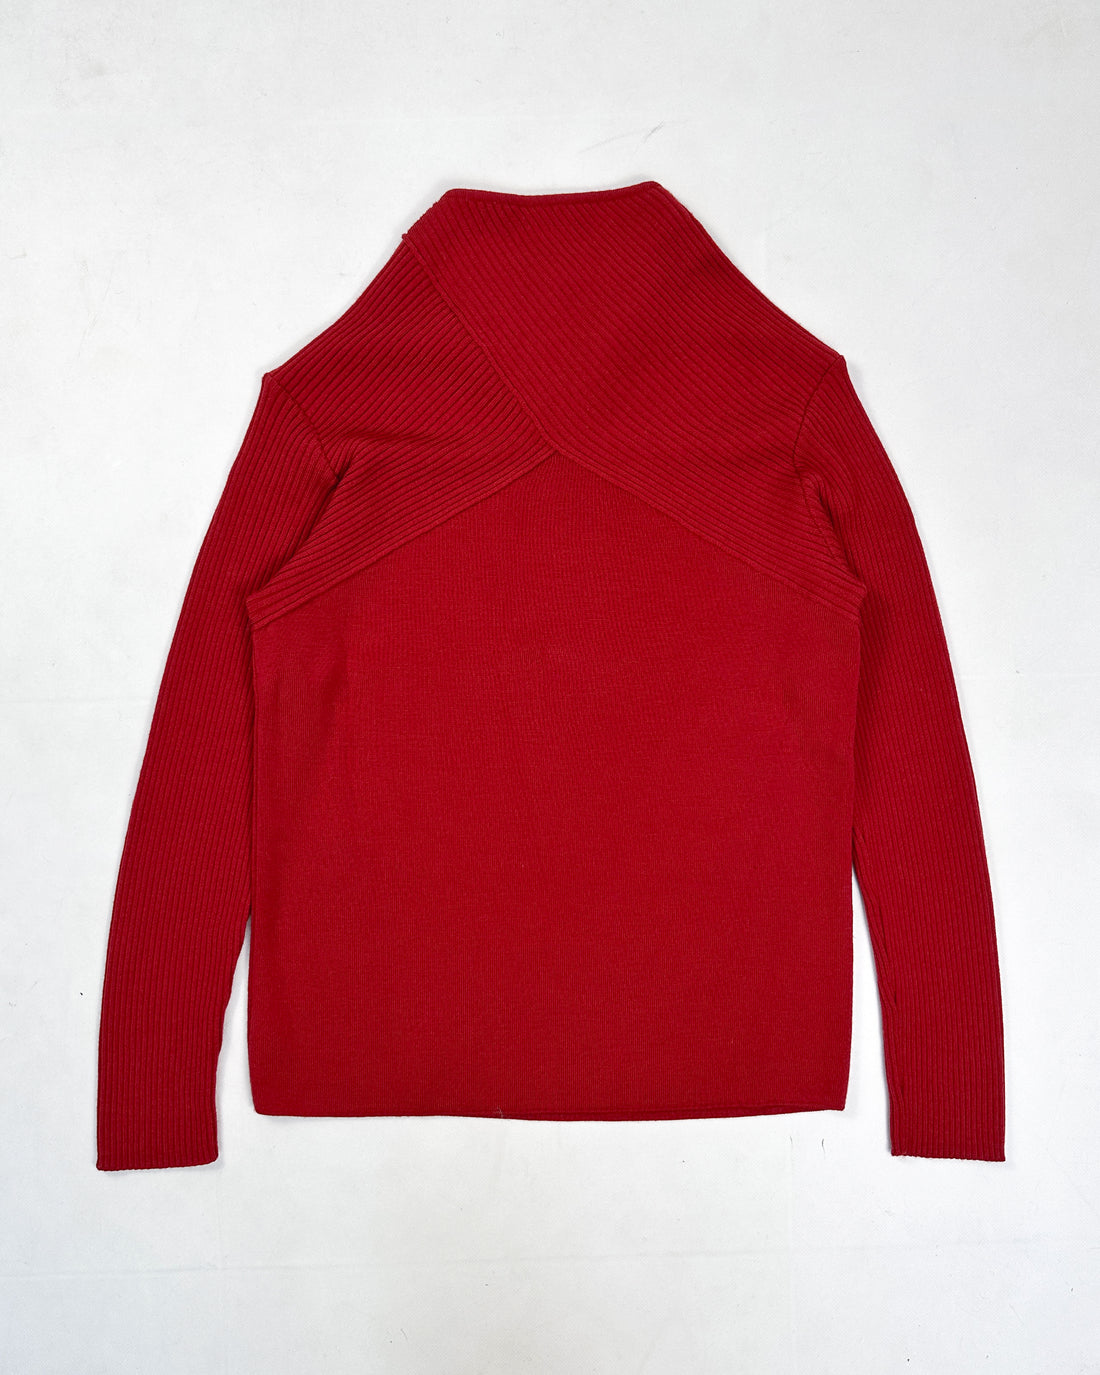 Armani Red Asymmetric Wool Knit 1990's